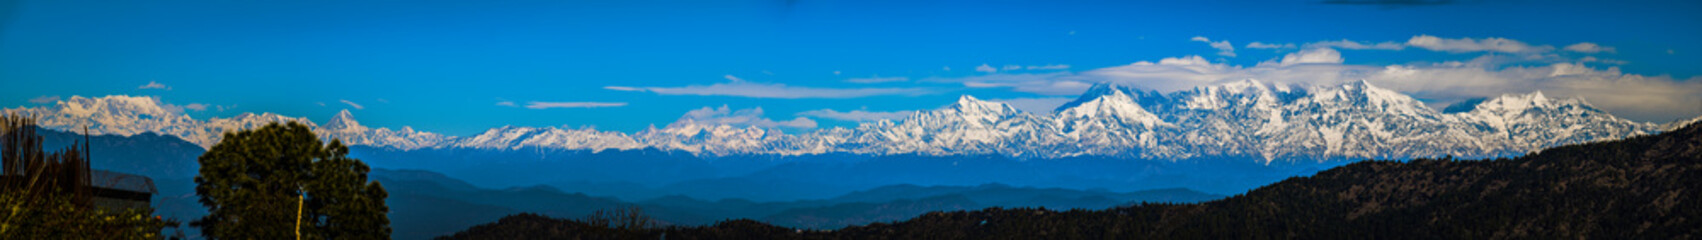 Snowy peak Himalayan mountain range panorama view extreme wide viewing mountains of India